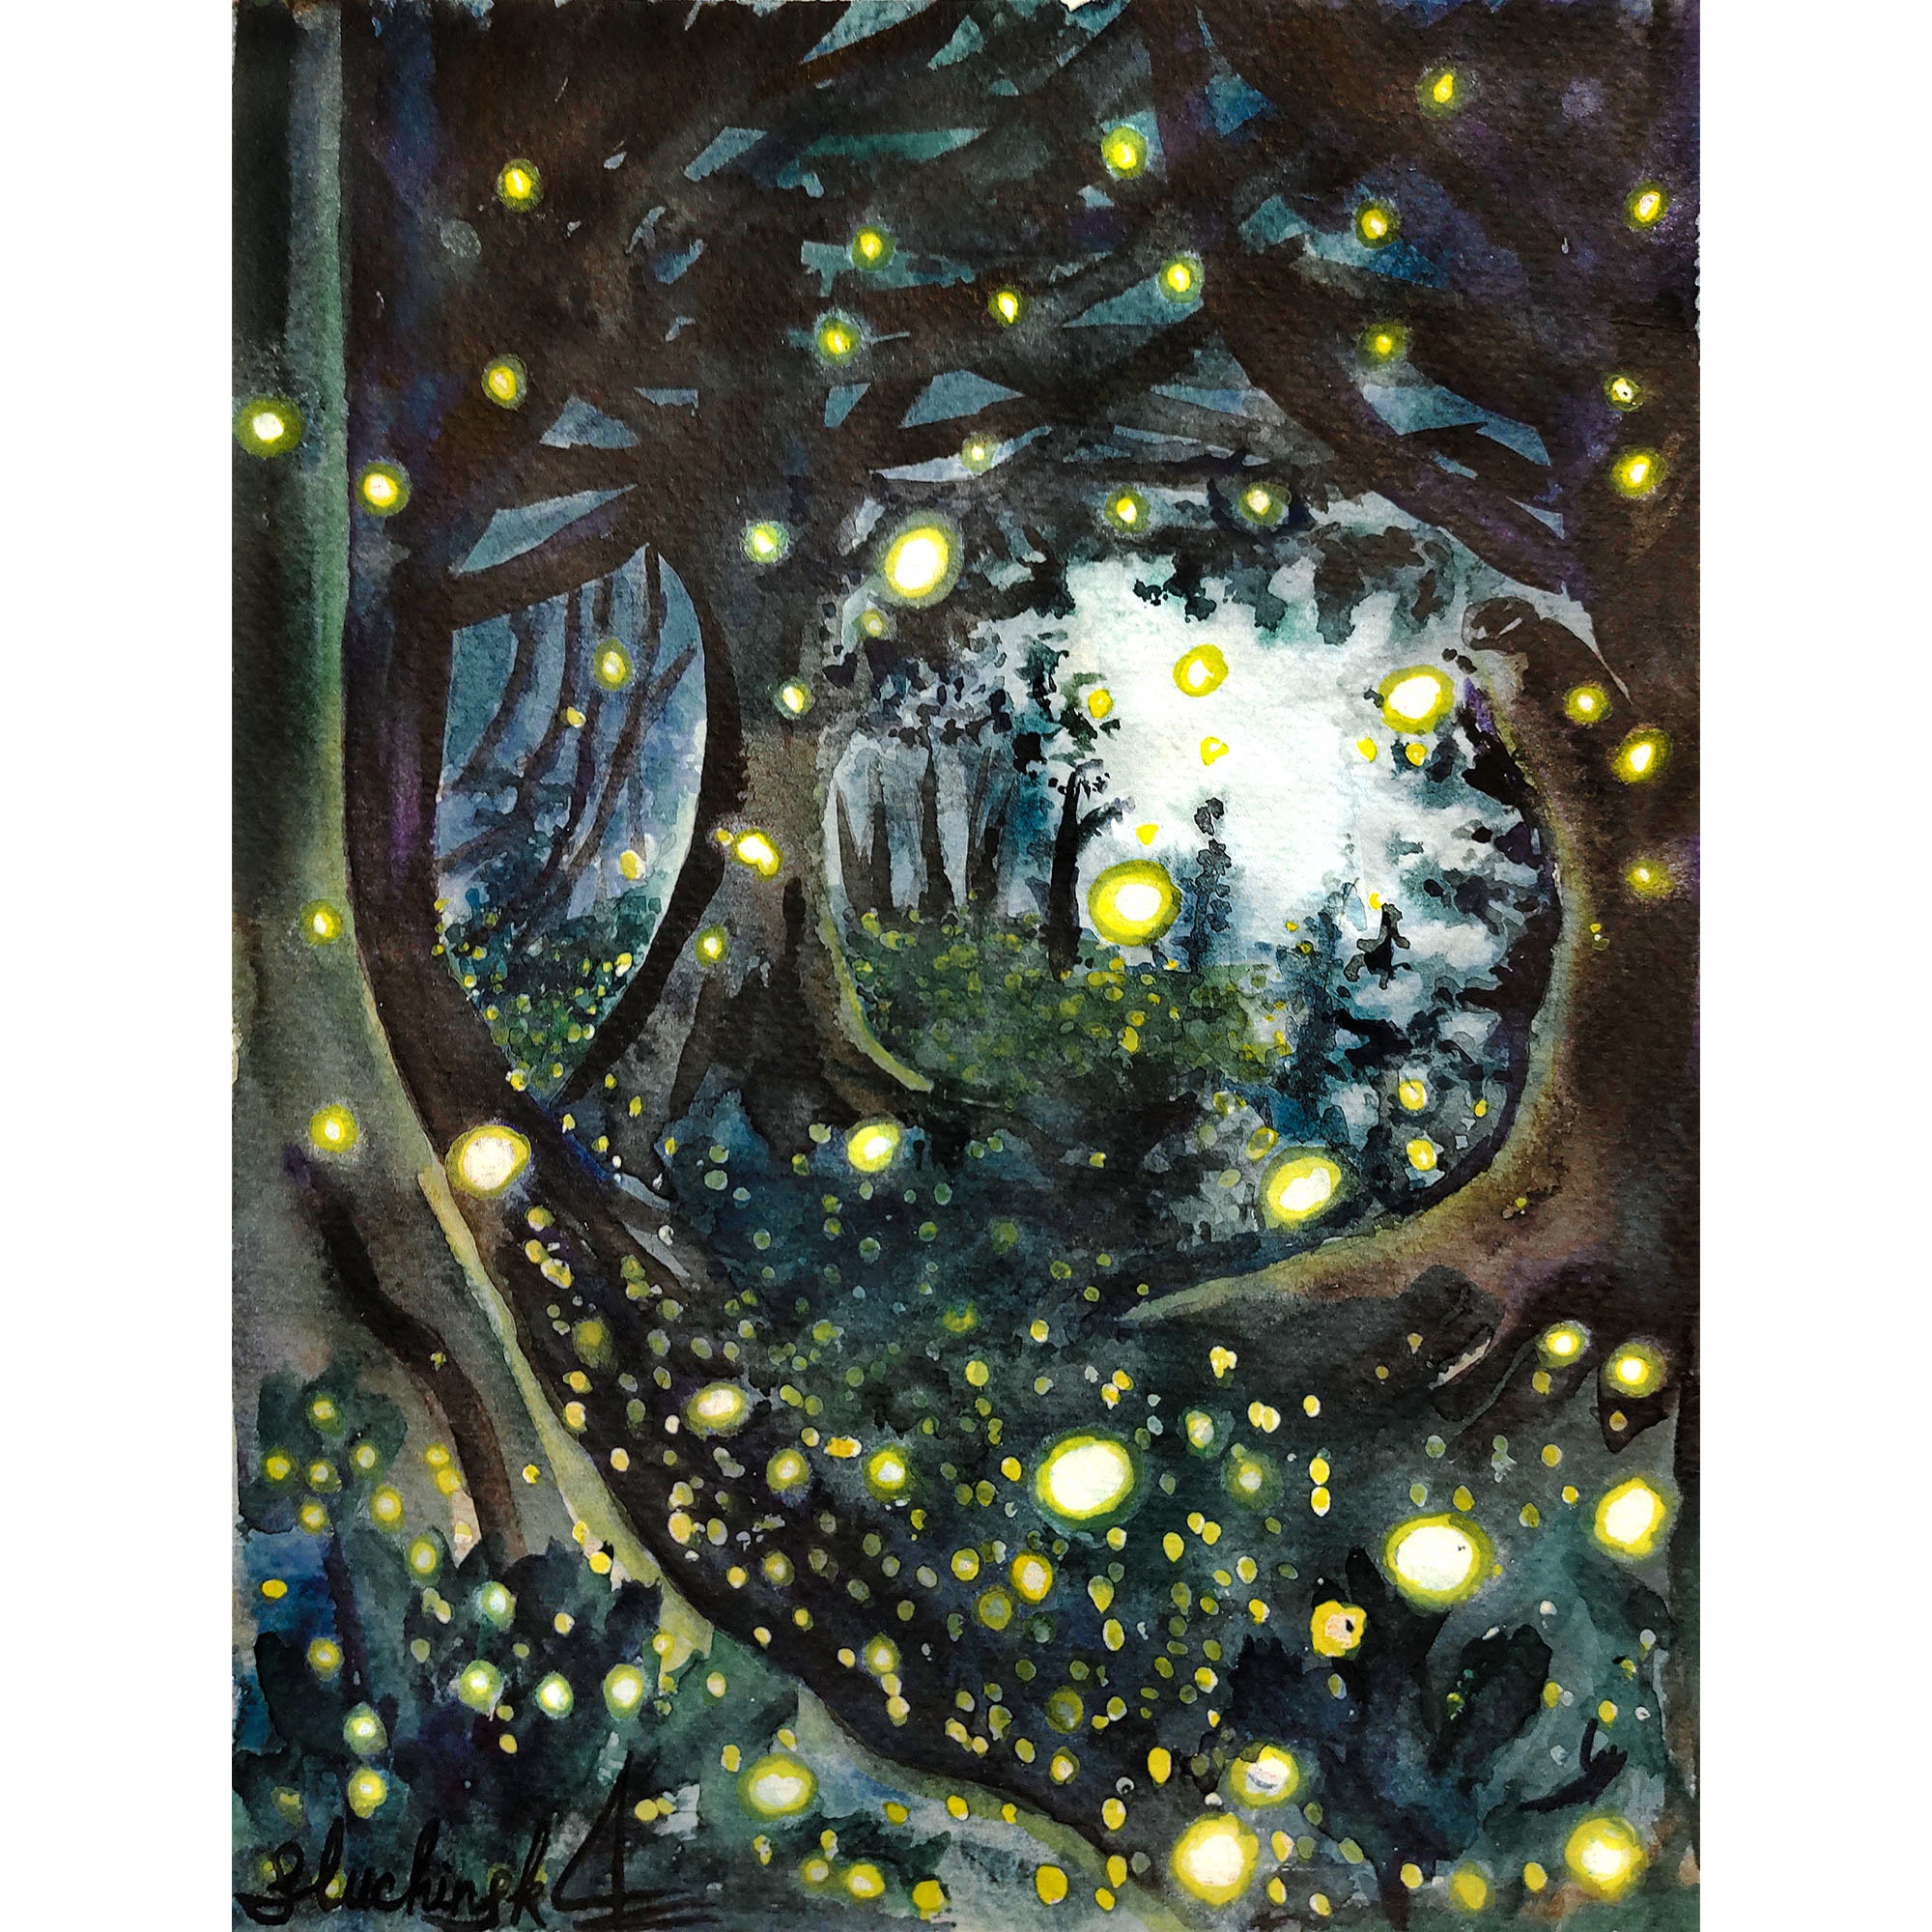 Night Forest Painting Digital Print Fantasy Artwork Nature Wall Art | eBay